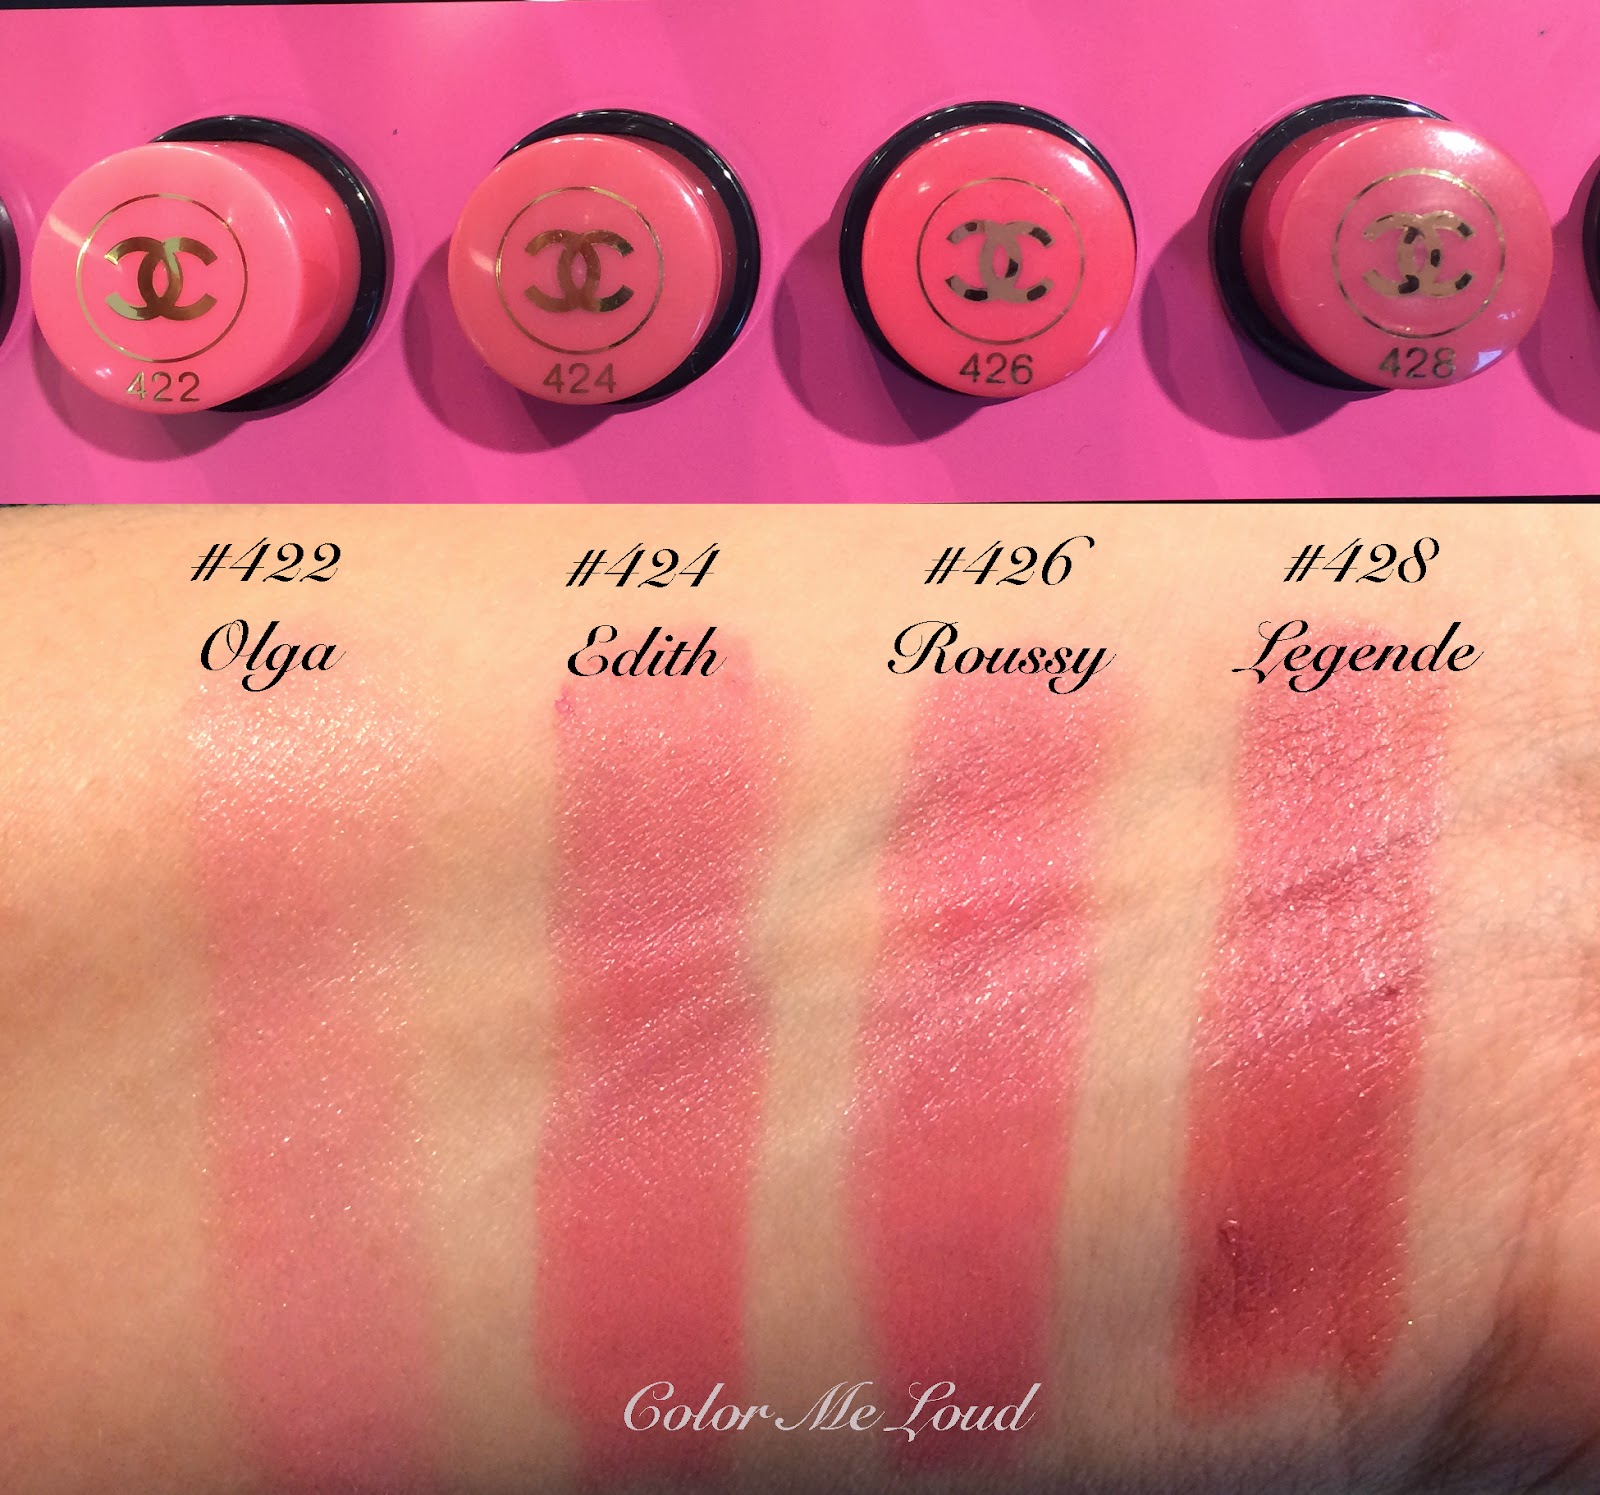 Chanel Rouge Coco Ultra Hydrating Lip Colour #416 Coco & #454 Jean